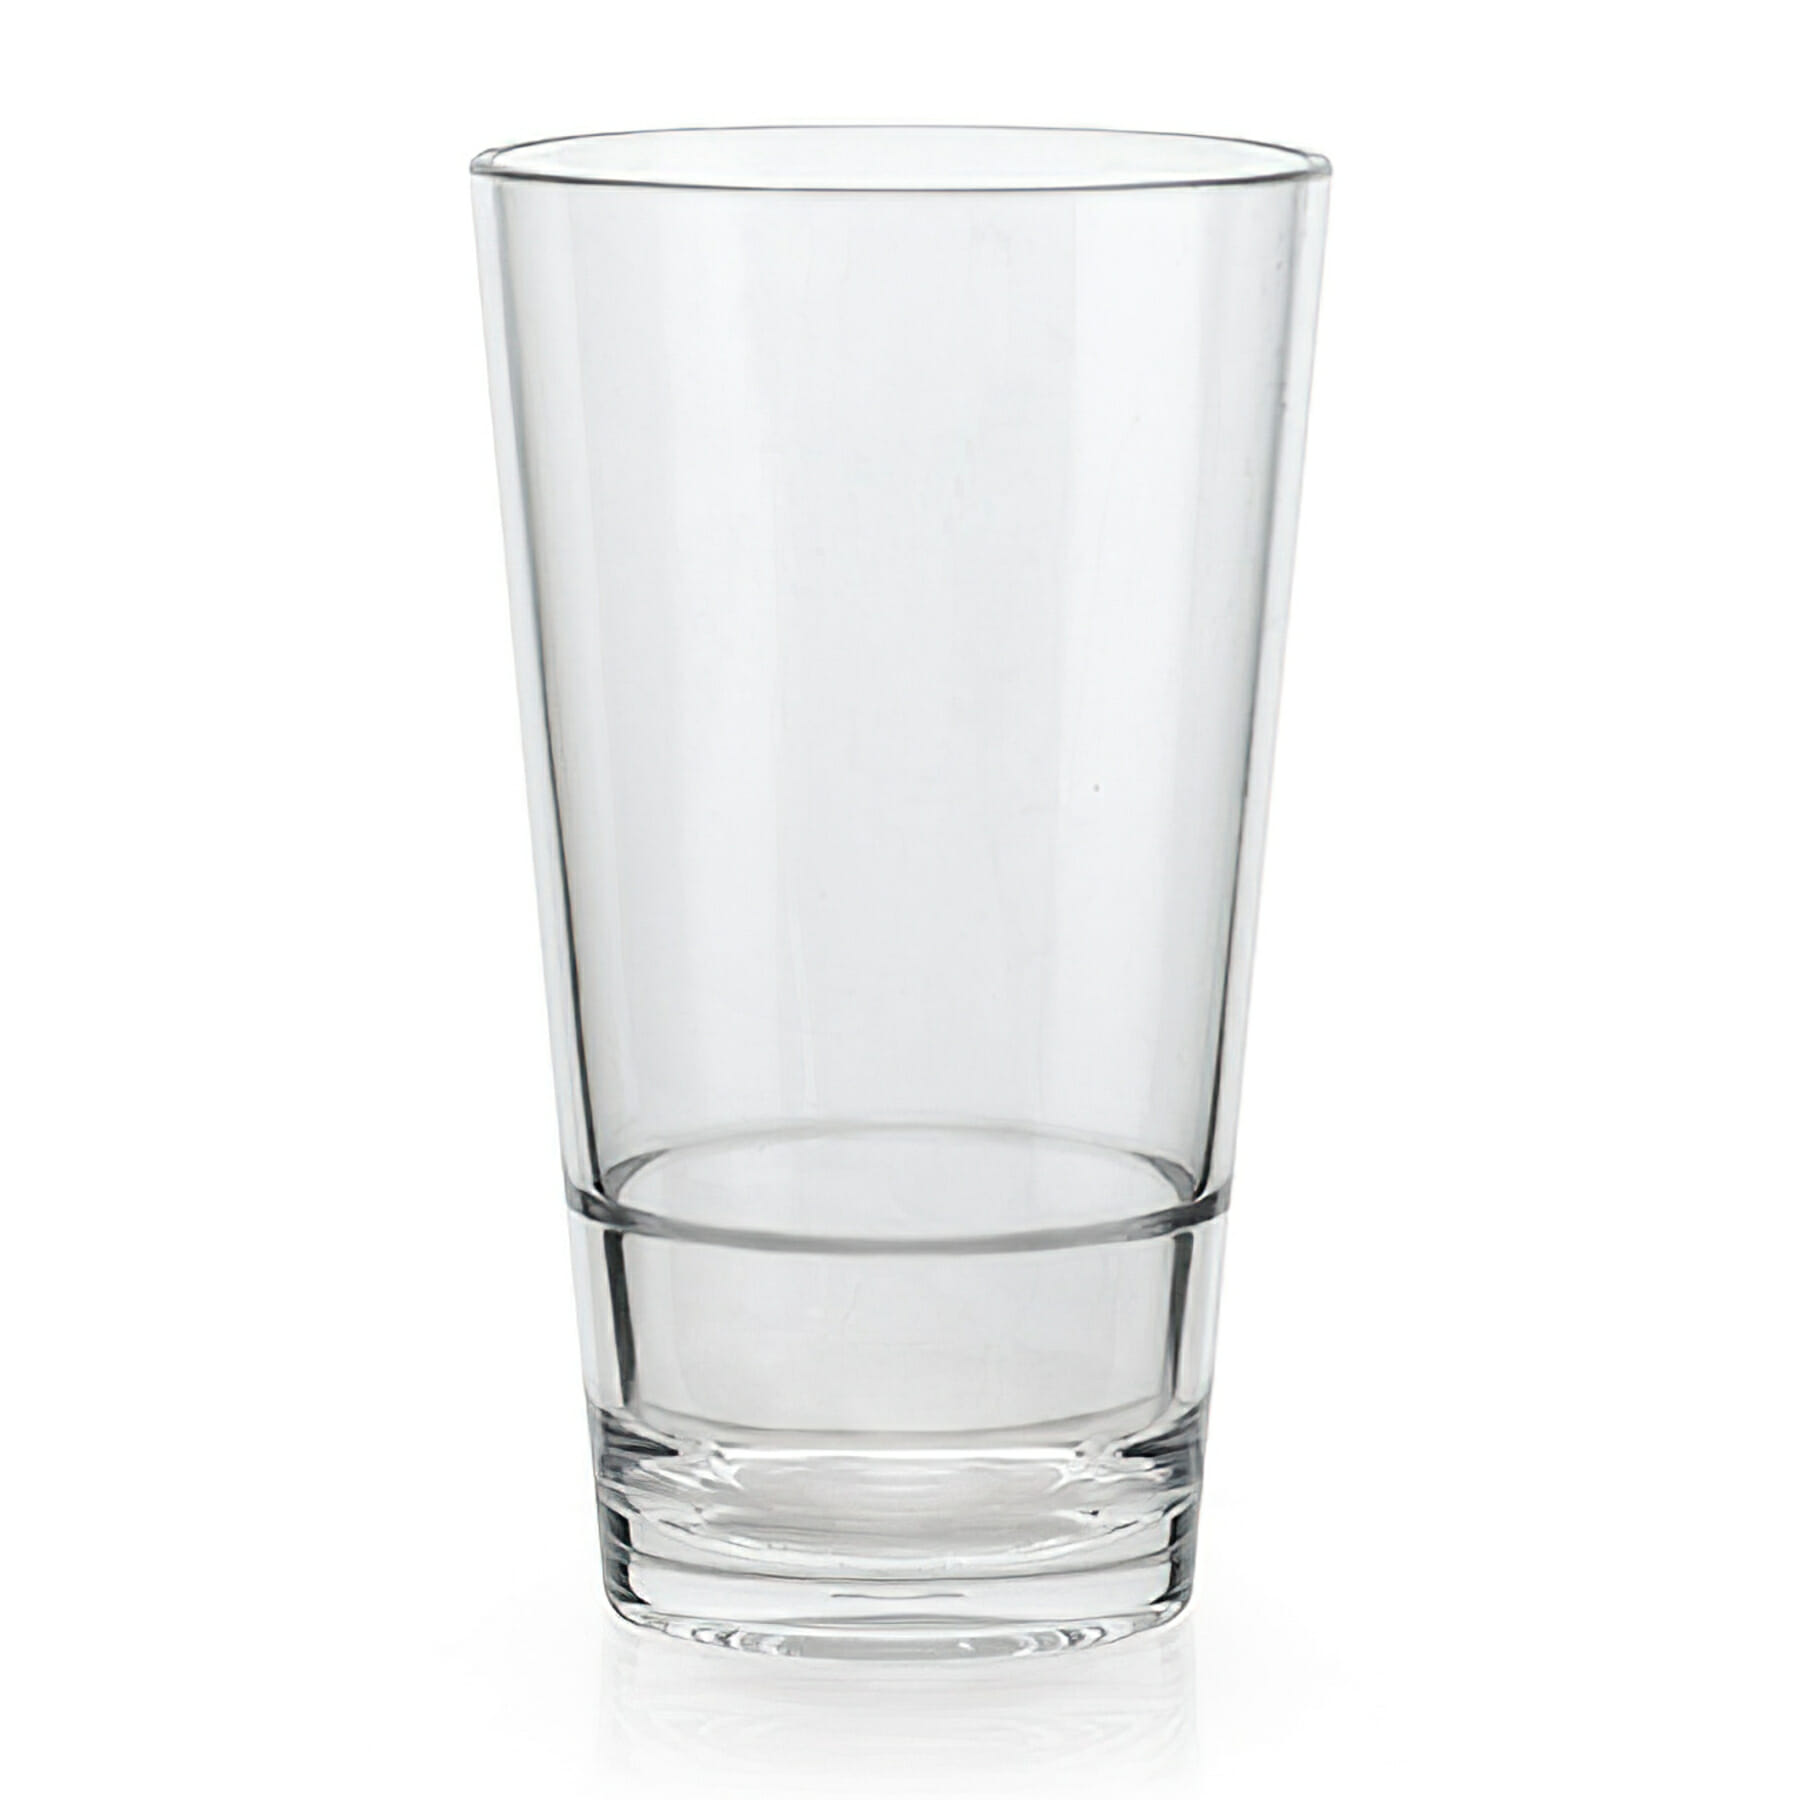 5 oz. (5.4 oz. rim-full), 2.25" Stackable Taster Glass, 4.2" tall